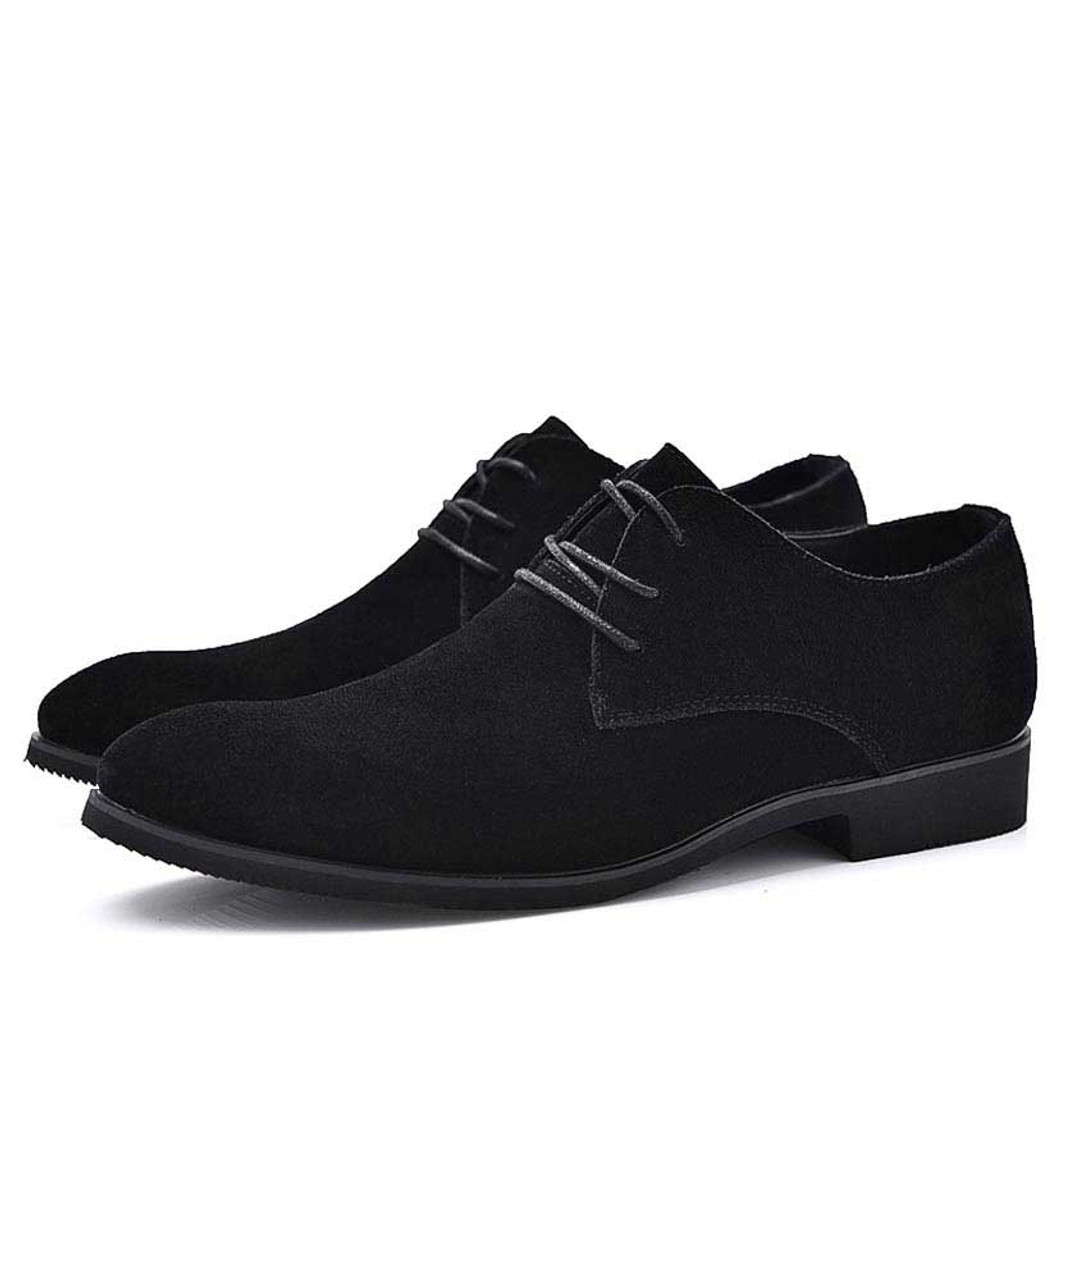 Black urban suede leather derby dress shoe | Mens dress shoes online 1672MS